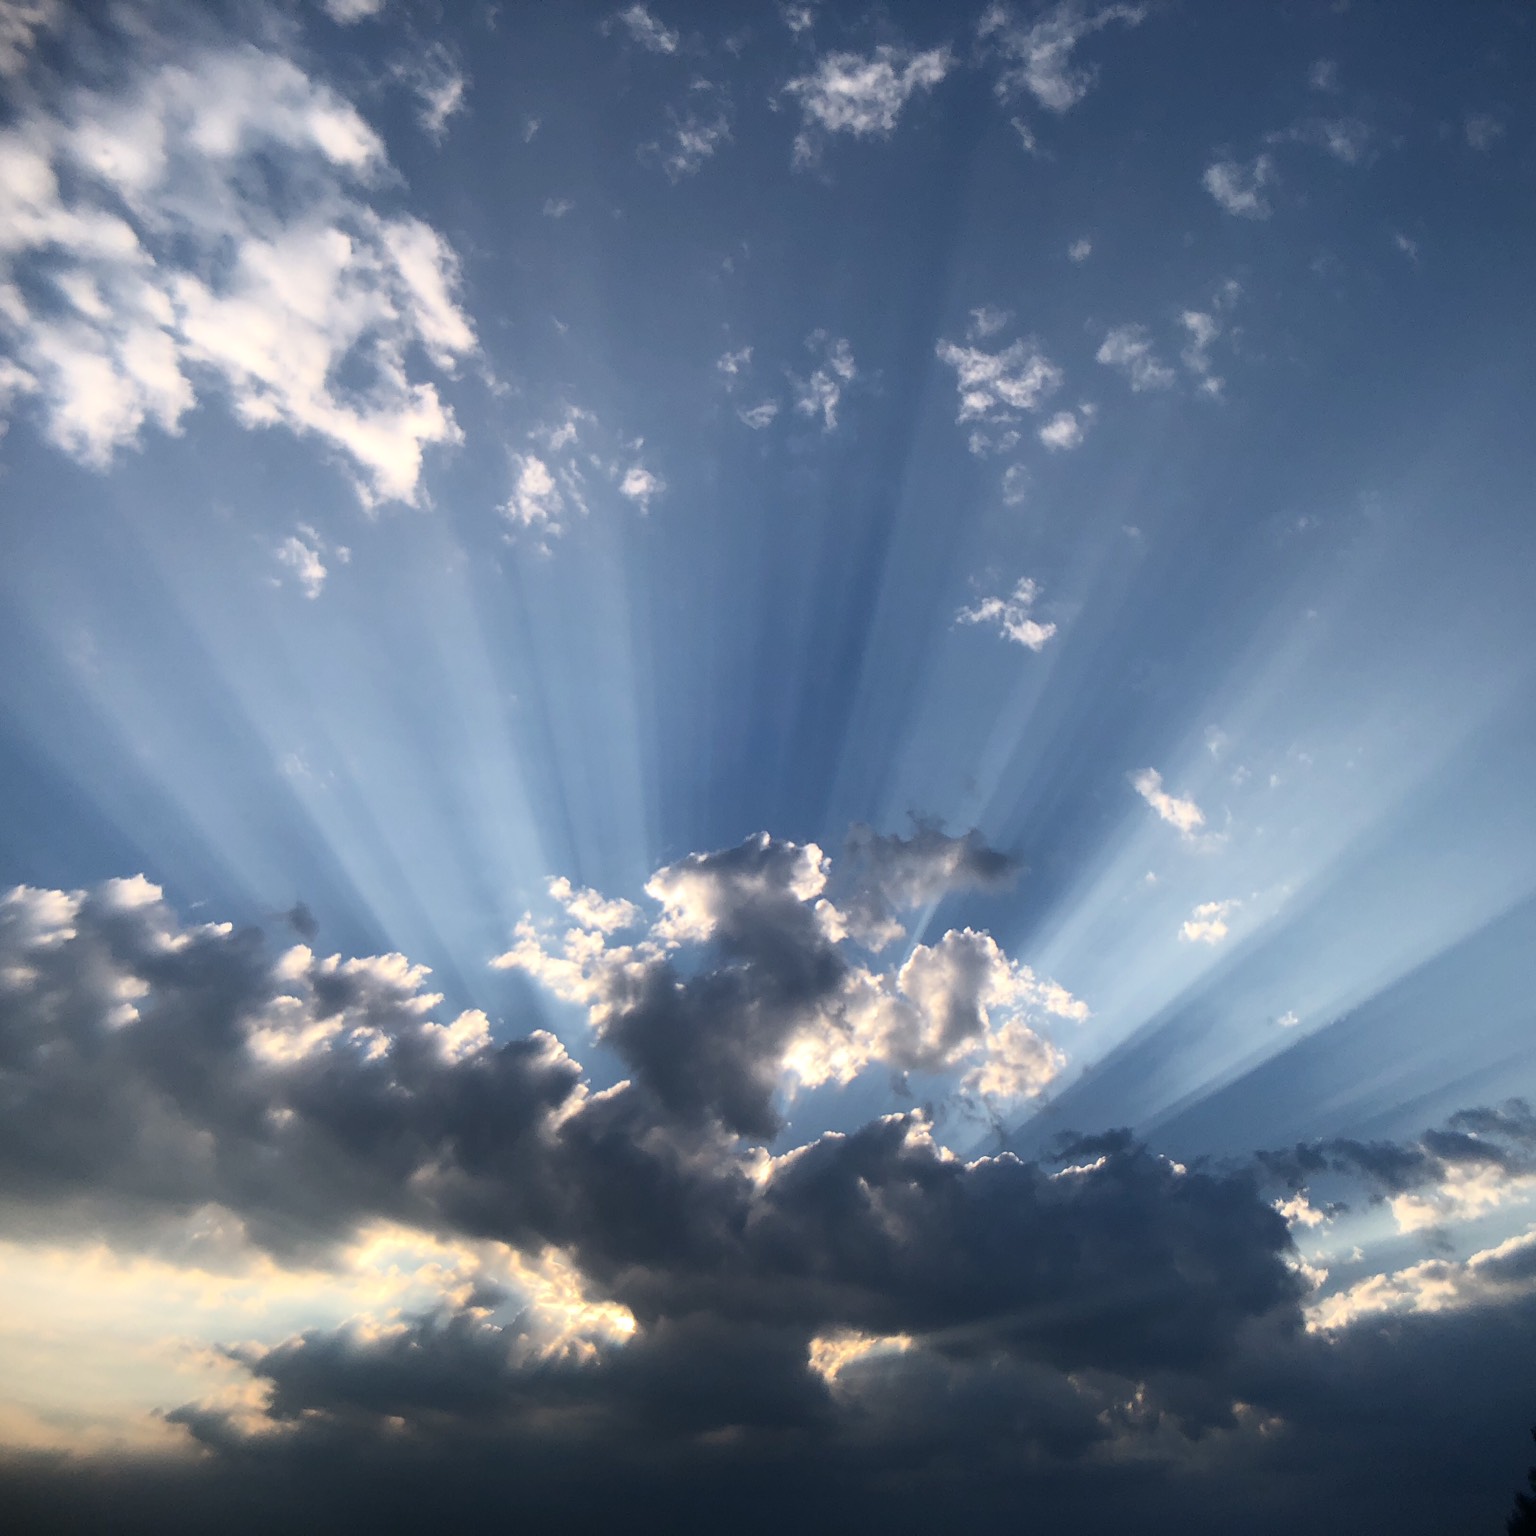 Crepuscular rays - Cloud Appreciation Society